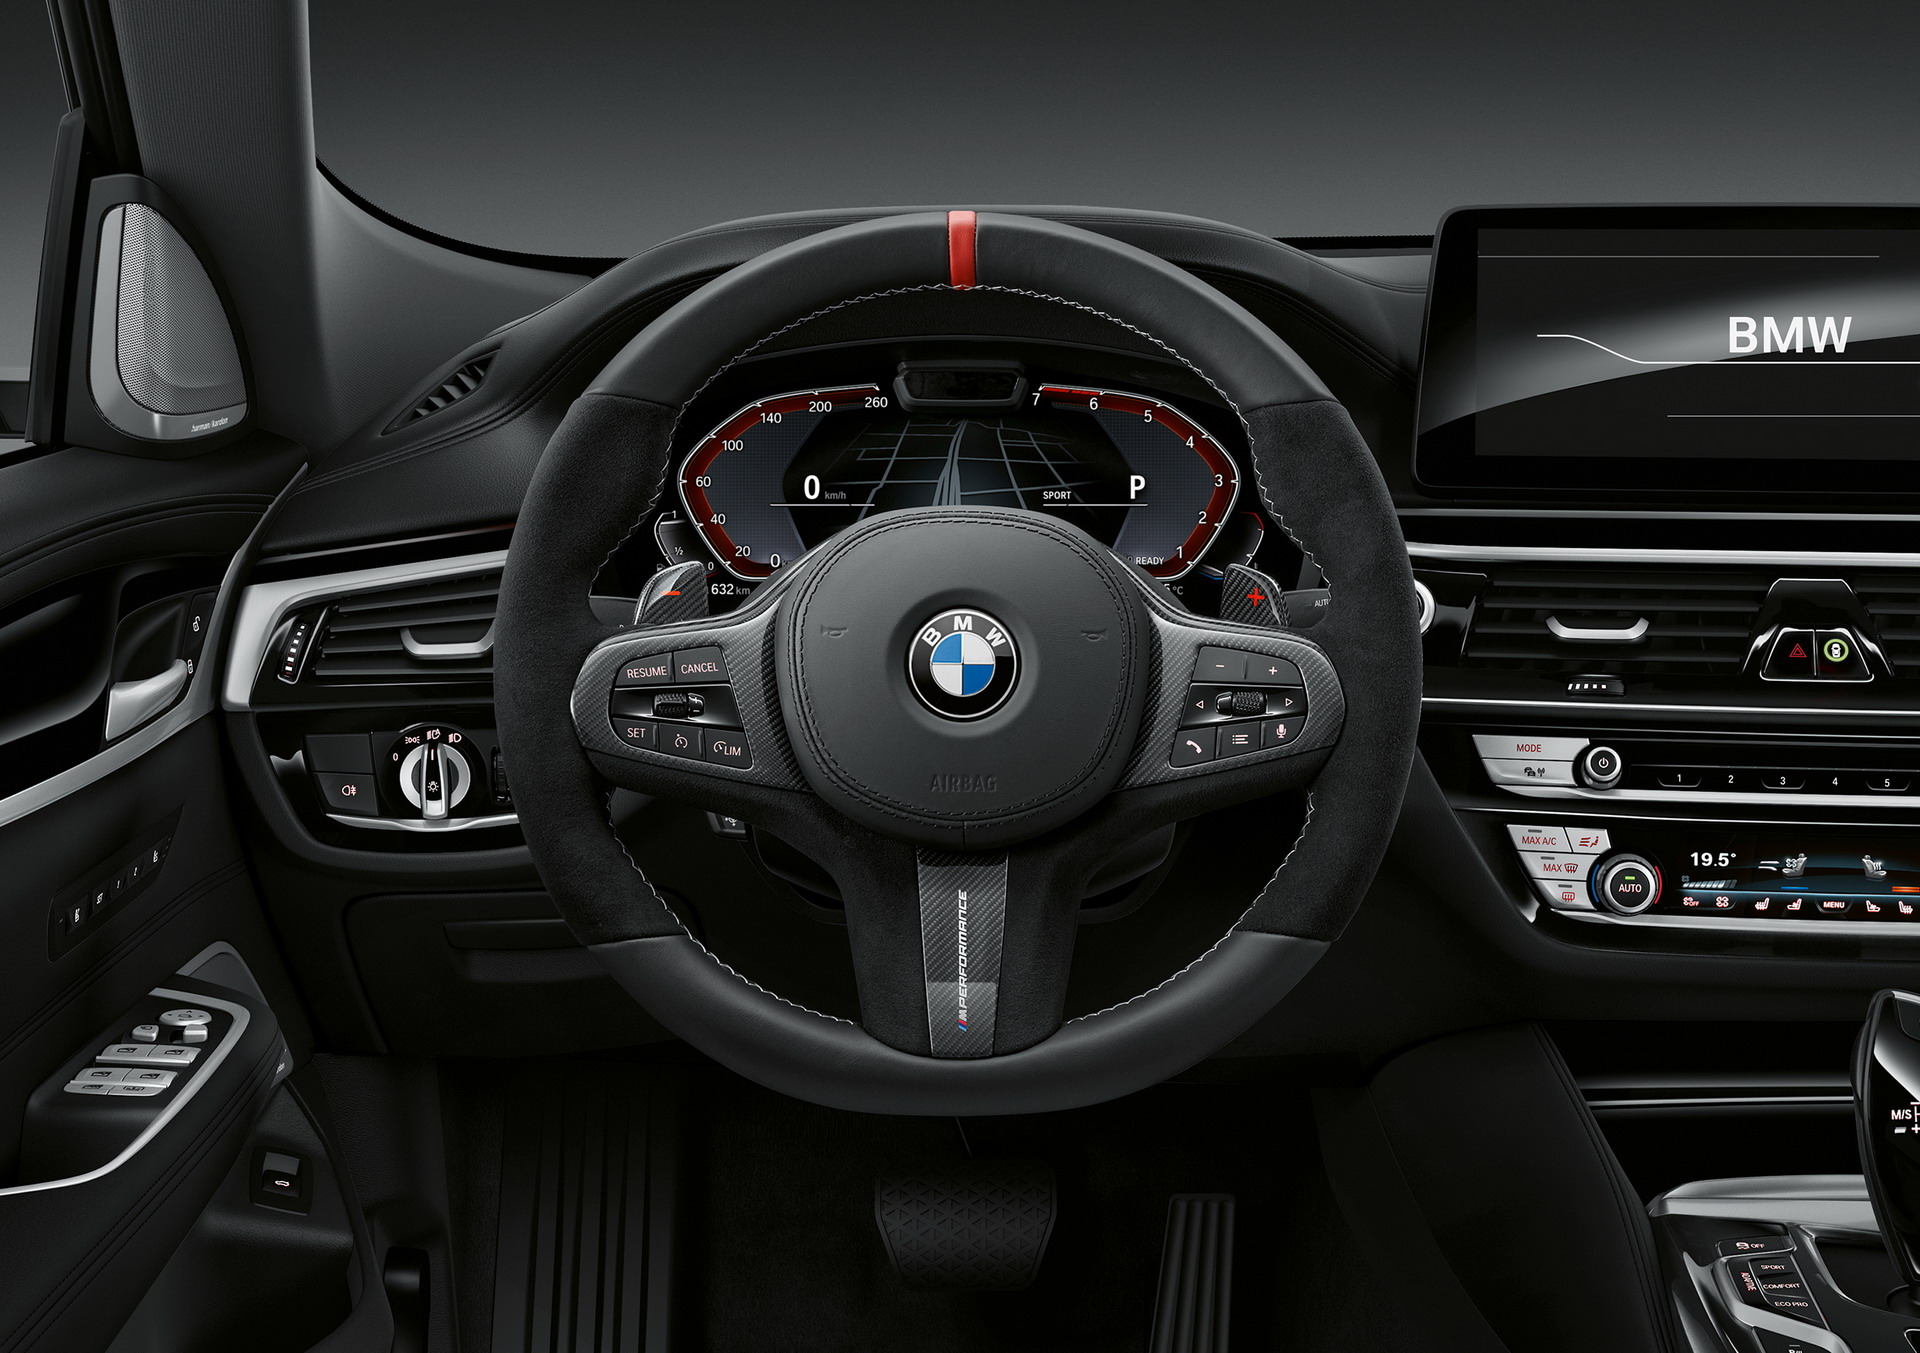 https://cdn.bmwblog.com/wp-content/uploads/2020/05/The-New-BMW-6-Series-GT-G32-LCI-M-Performance-Parts-3.jpg